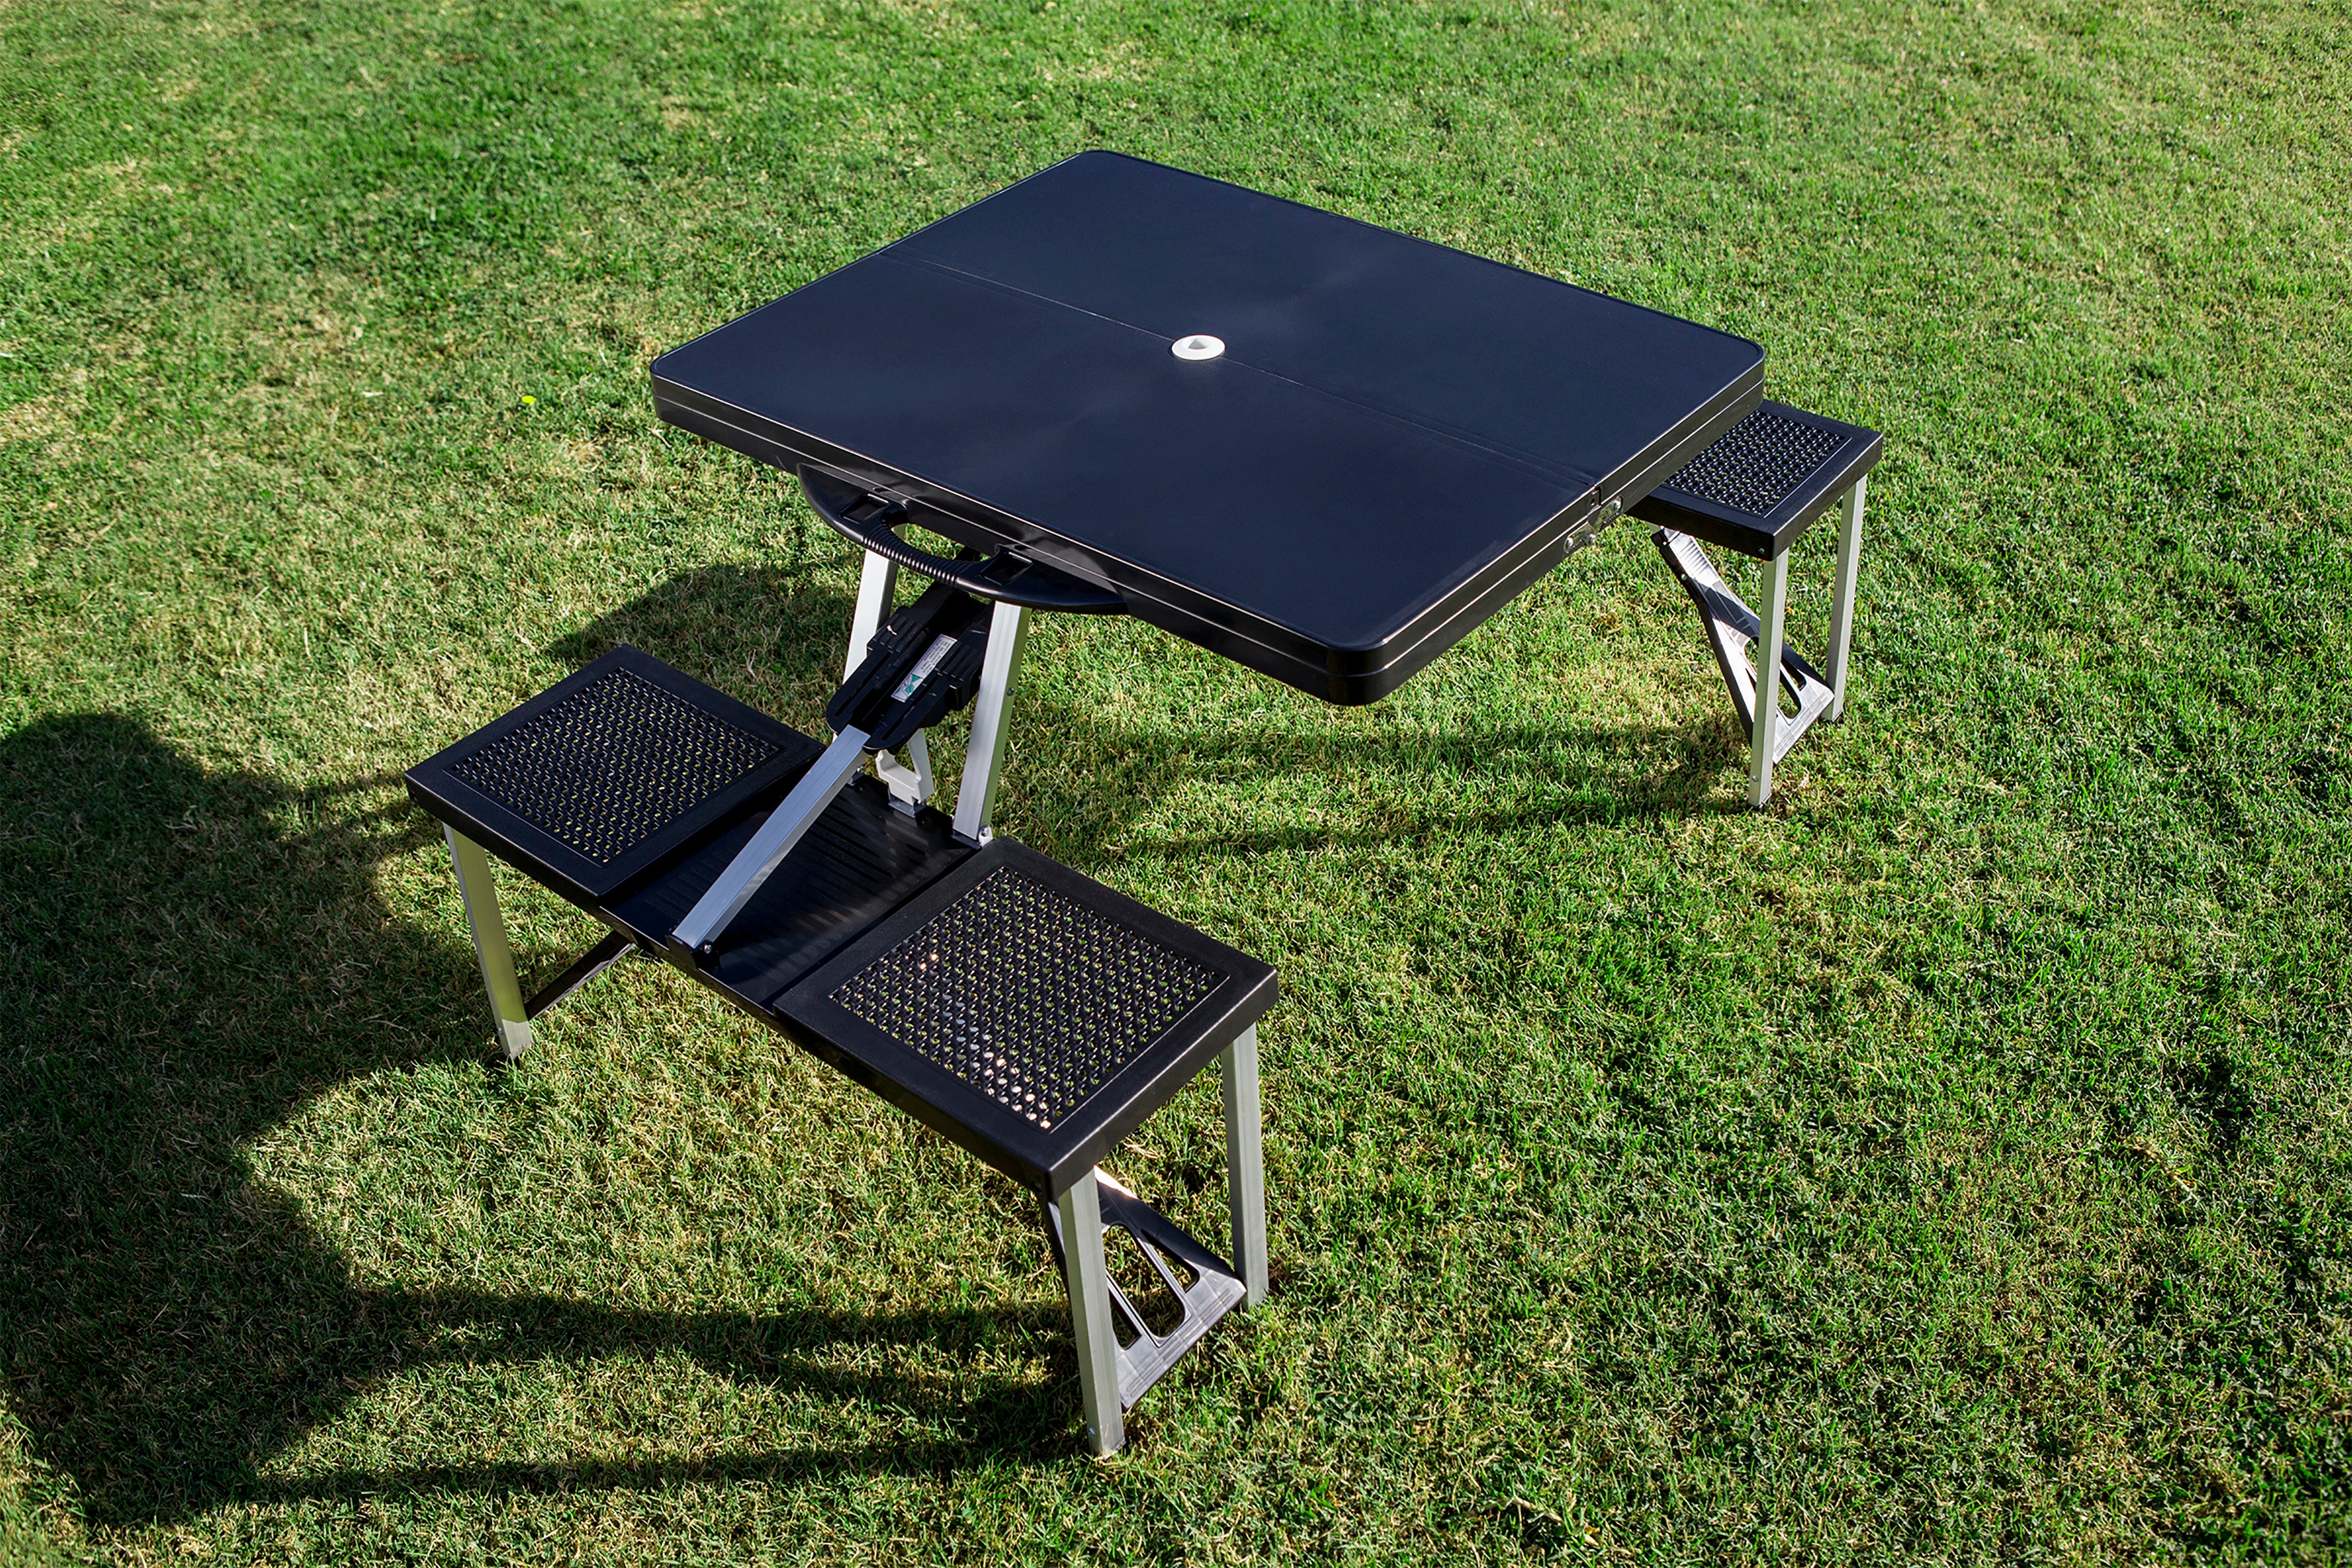 San Francisco Giants Baseball Diamond - Picnic Table Portable Folding Table with Seats